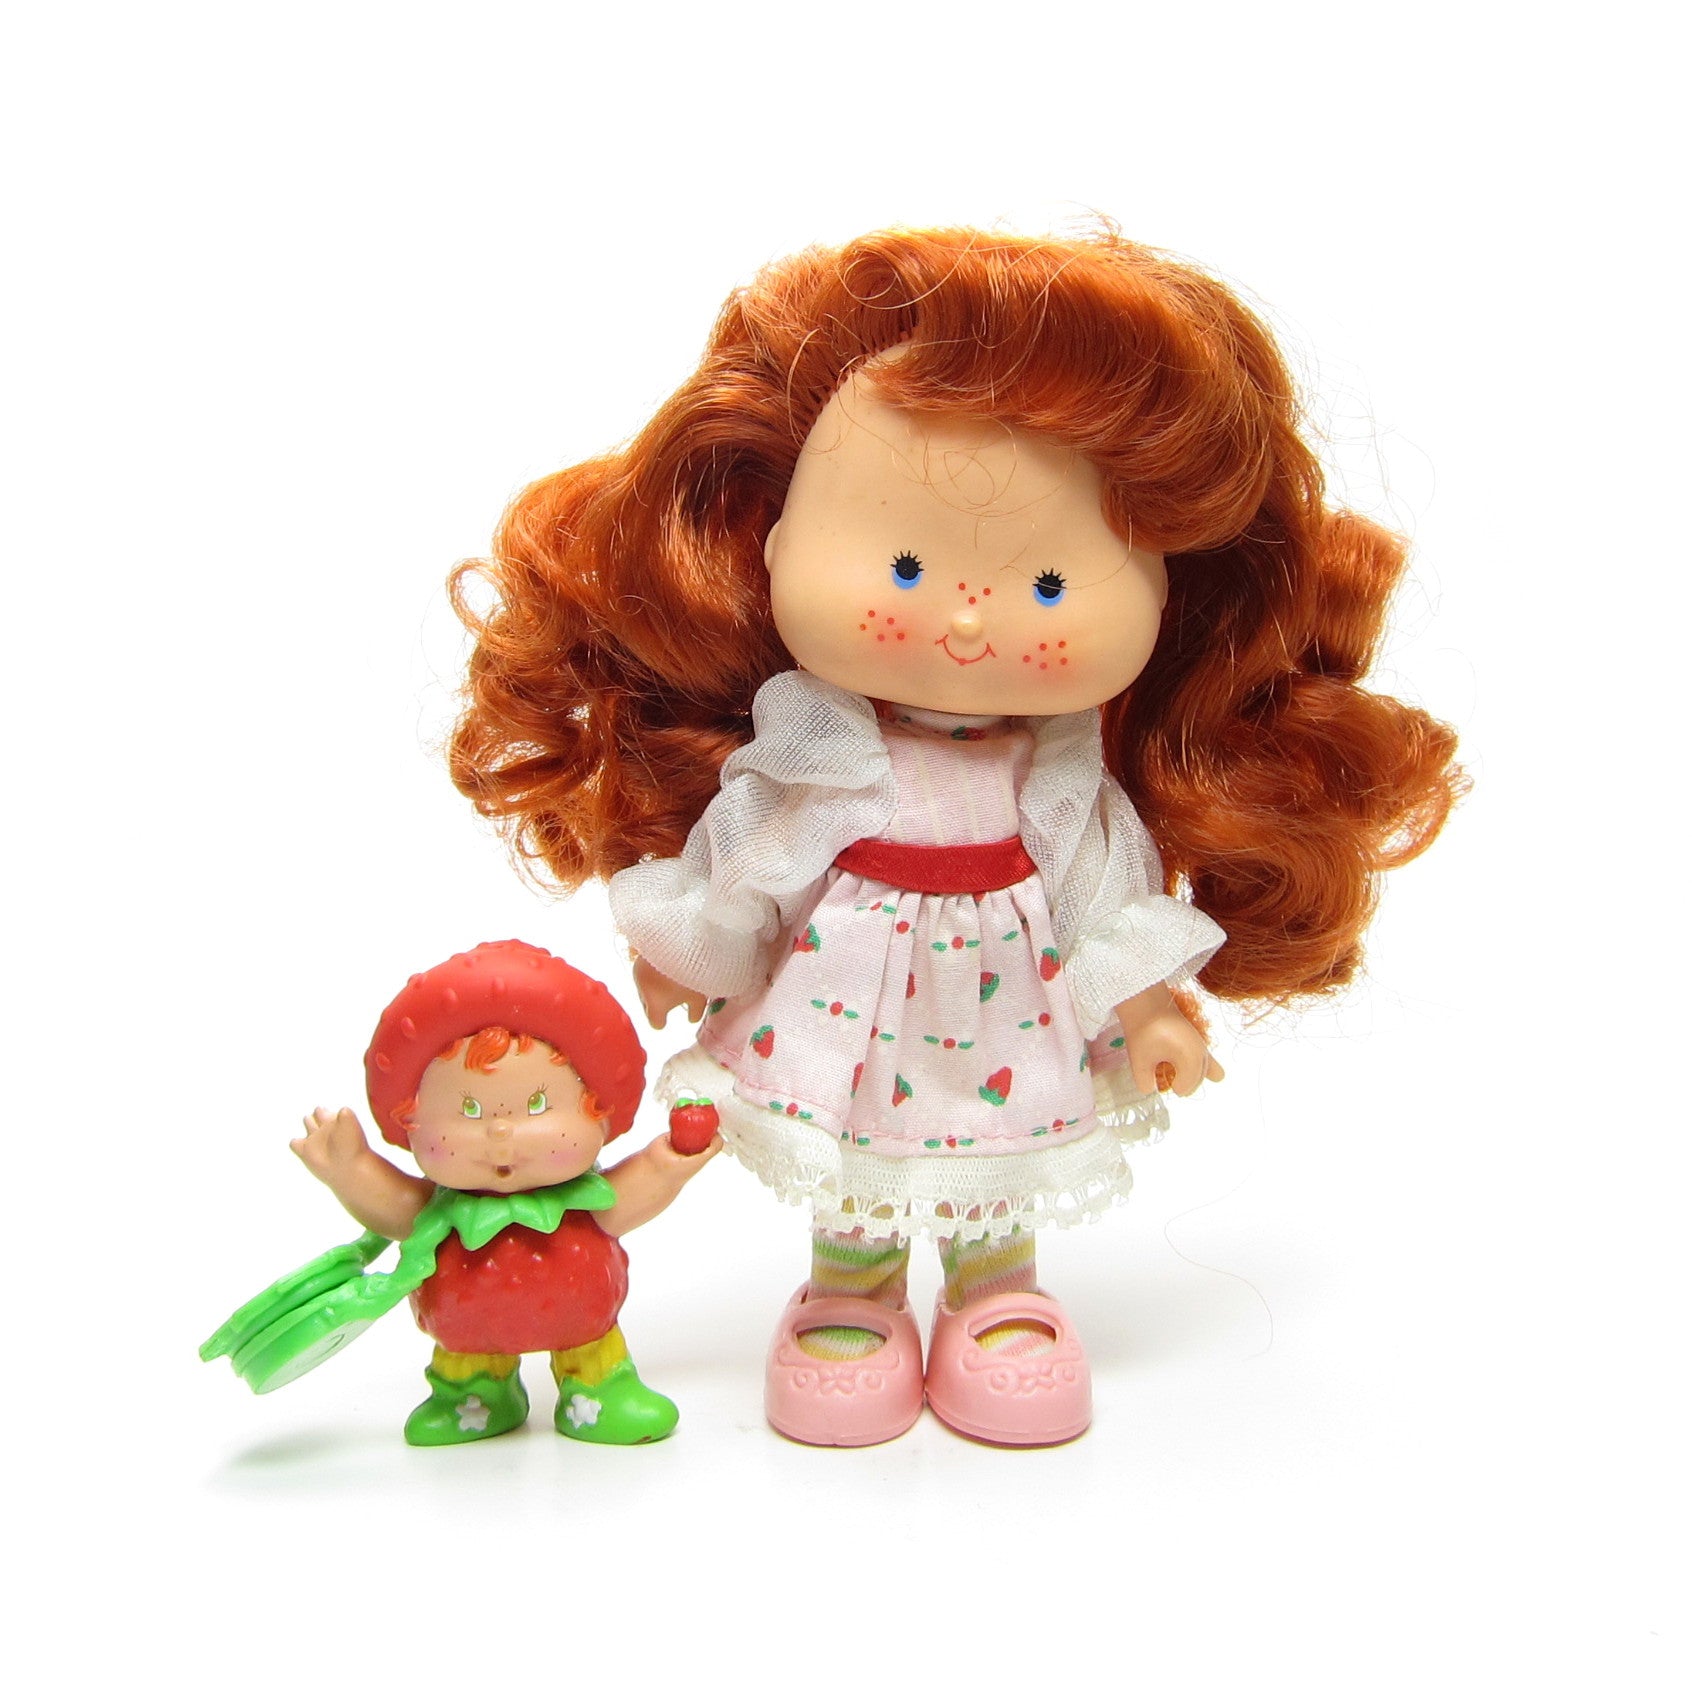 Strawberry Shortcake Berrykin doll with Strawberrykin Critter